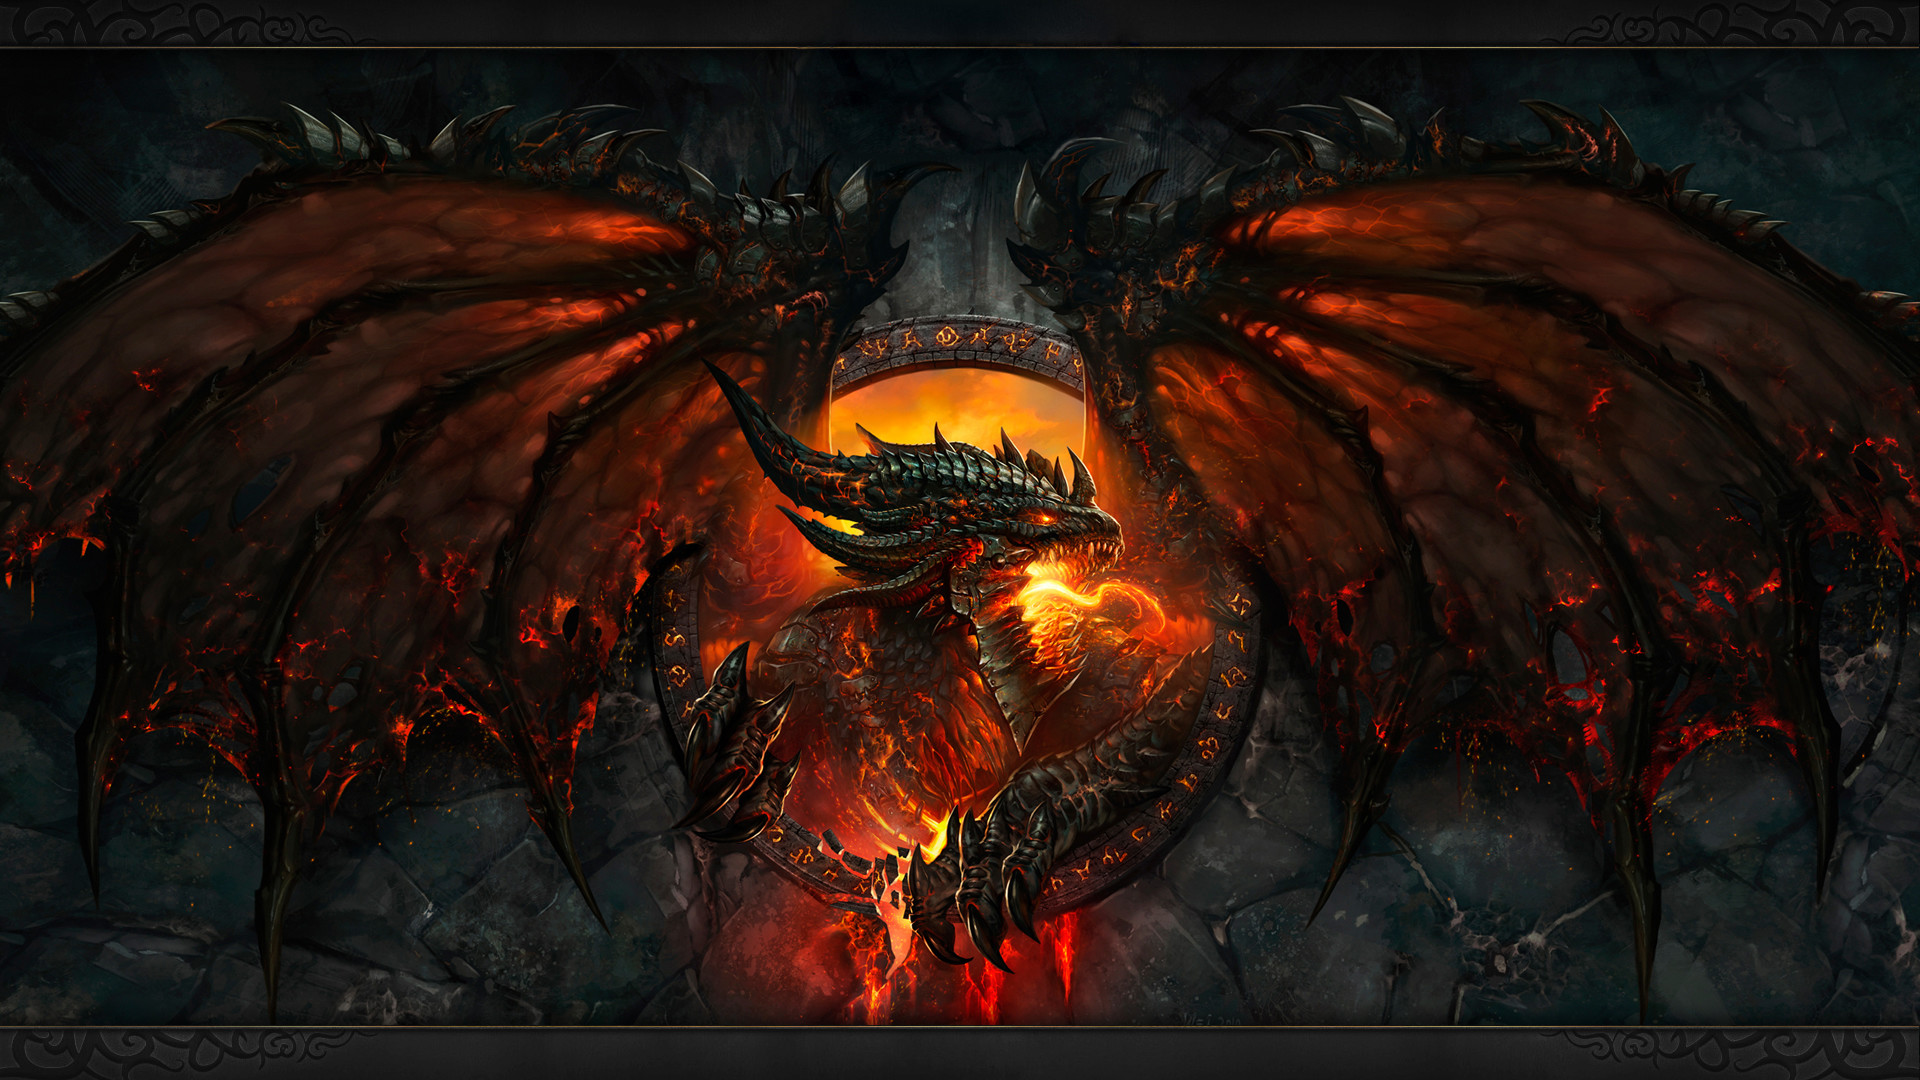 1920x1080 Blizzard Wow Cataclysm Fire Dragon Wallpaper - http://www.gbwallpapers.com